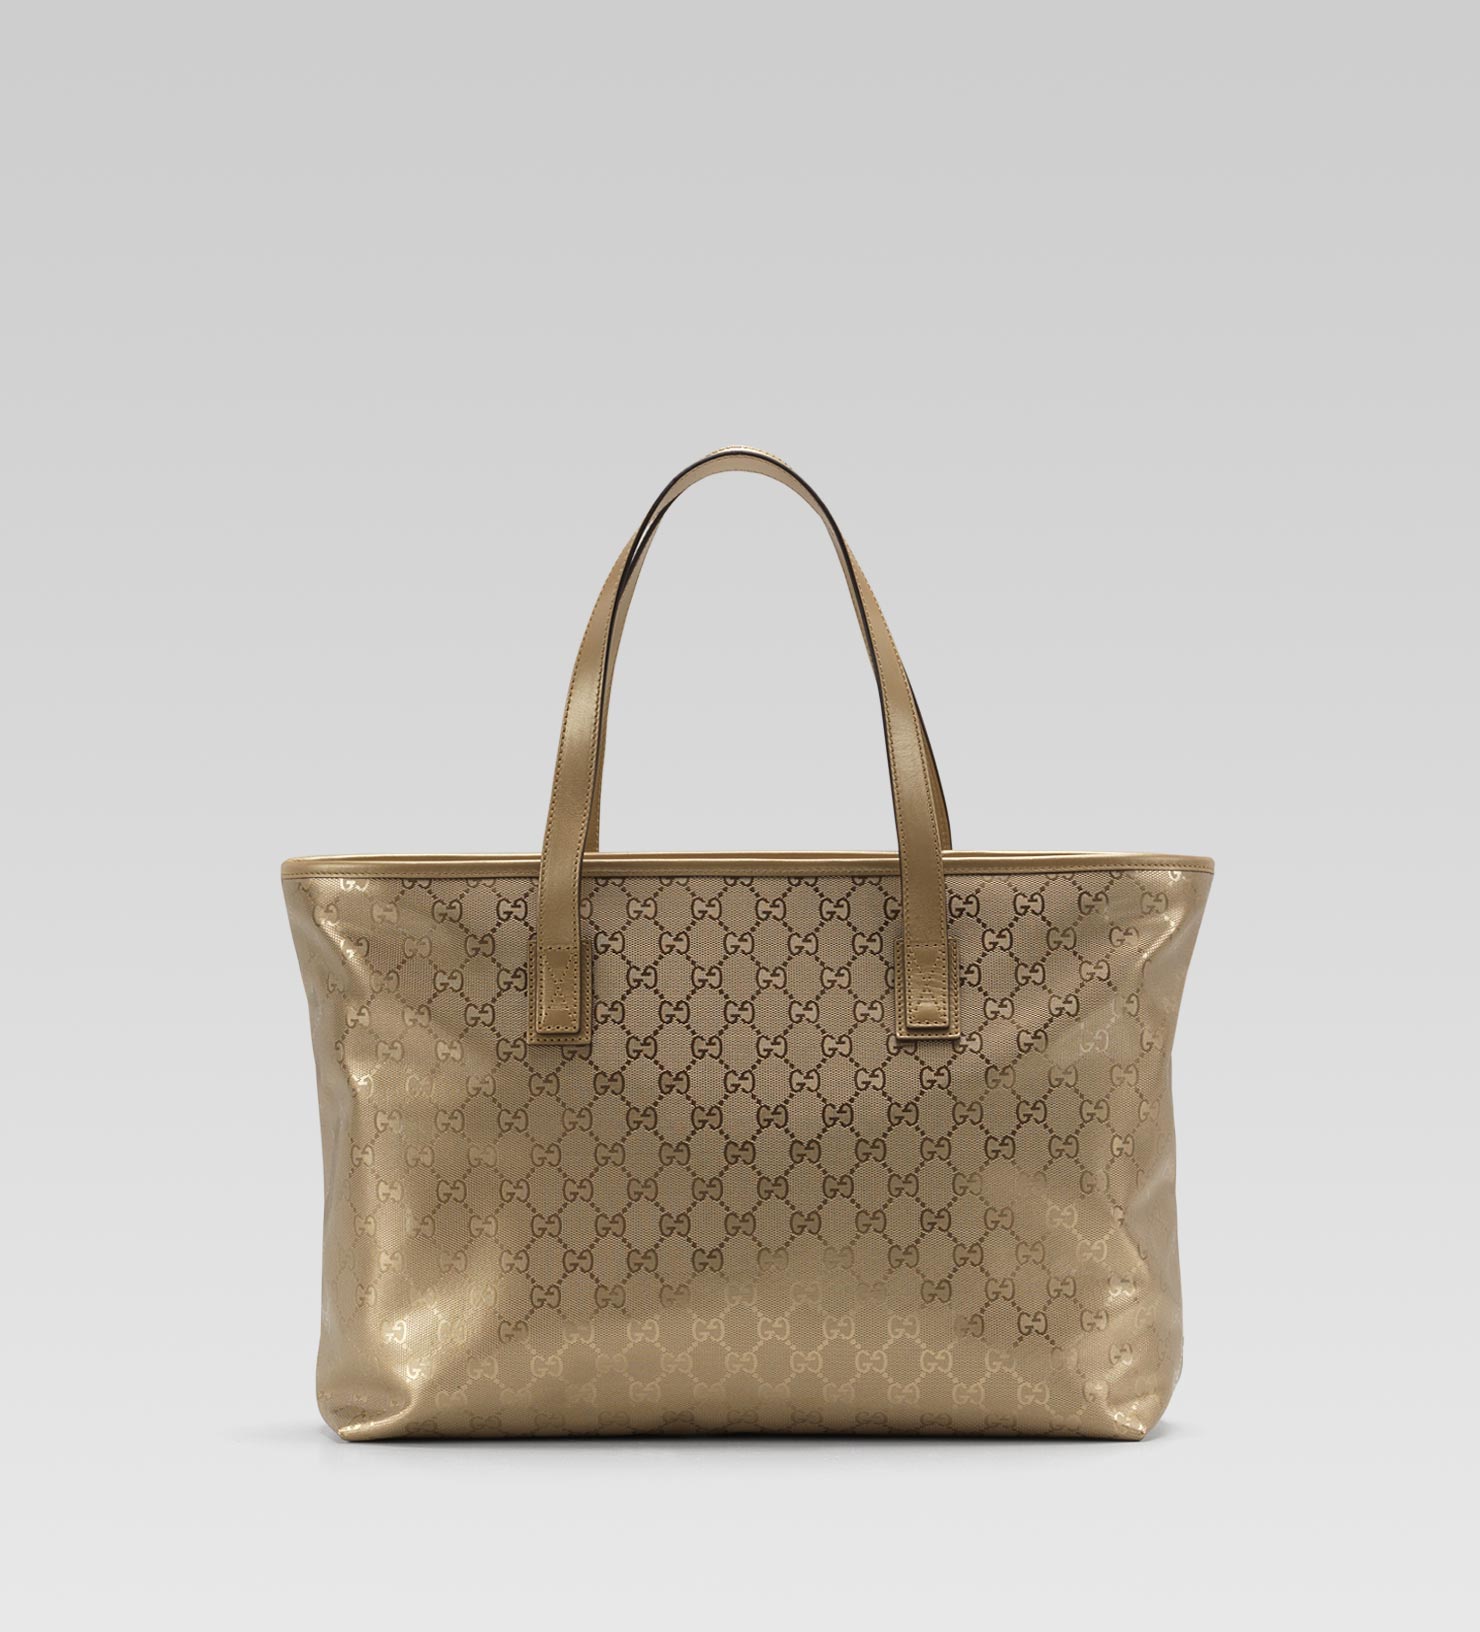 Lyst - Gucci Tote Bag in Metallic for Men